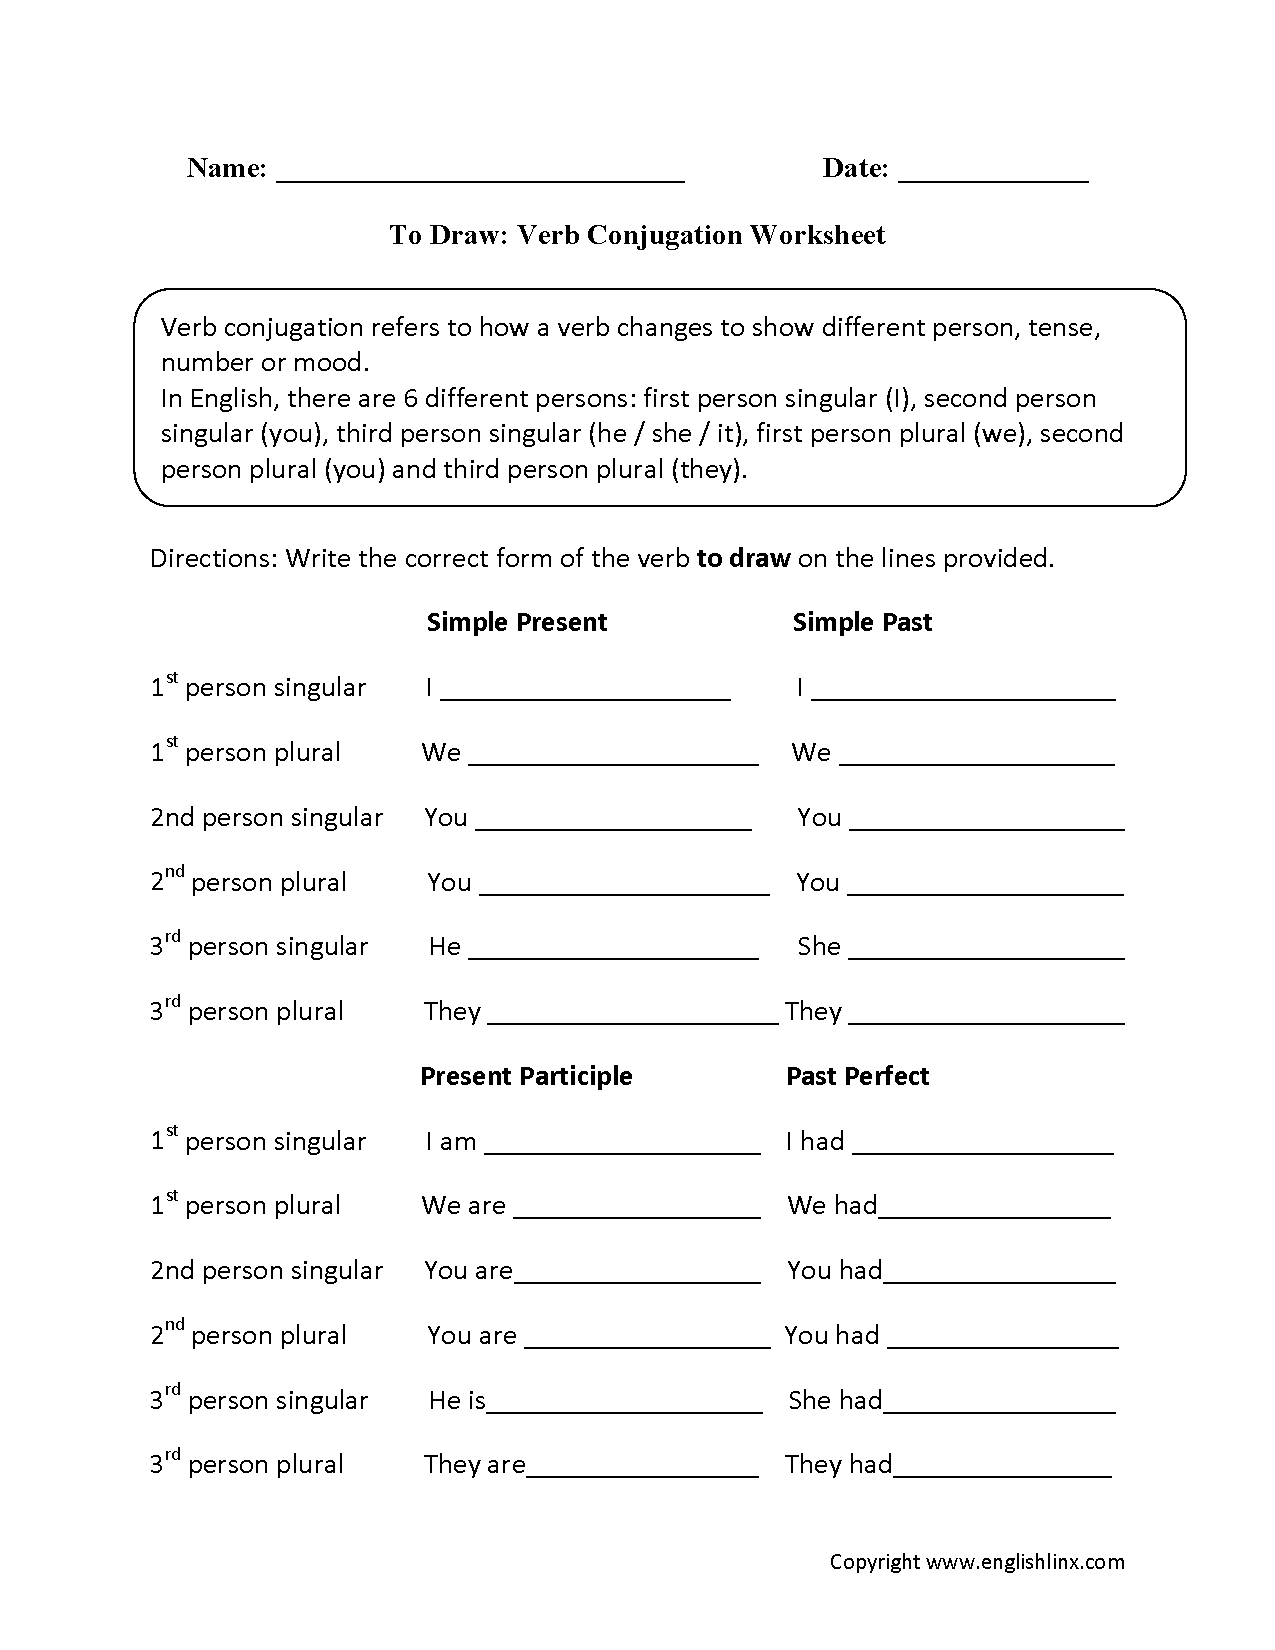 verbs-worksheets-verb-conjugation-worksheets